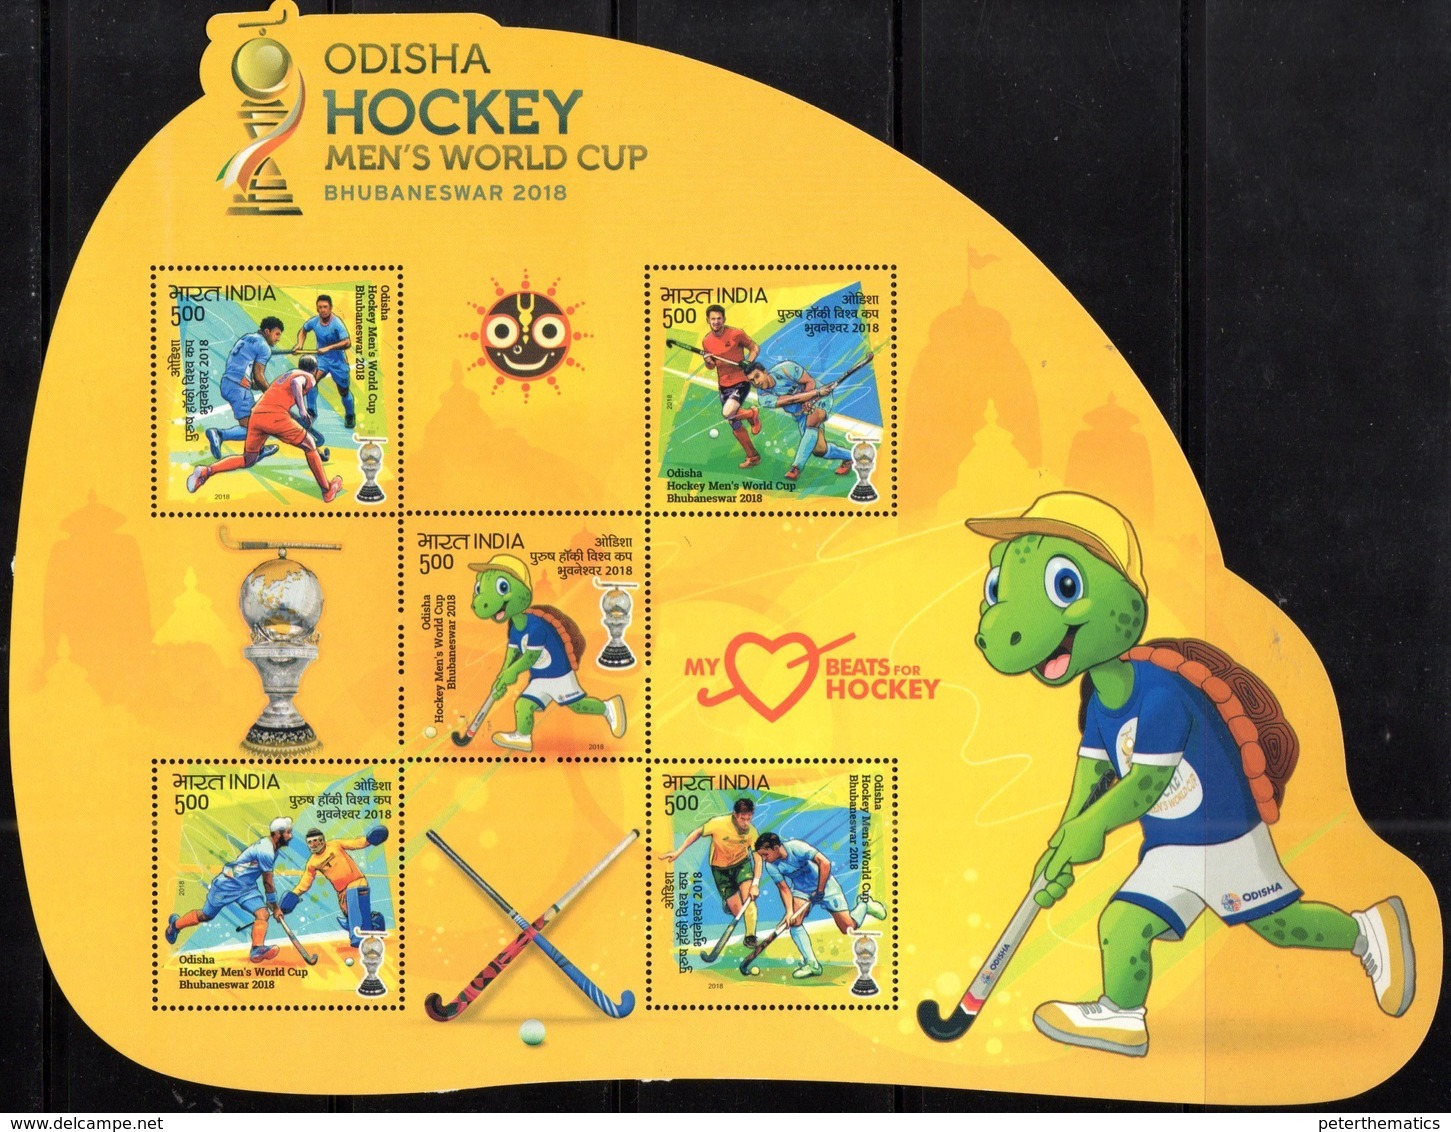 INDIA, 2018, MNH, HOCKEY, MEN'S WORLD CUP, ODISHA HOCKEY WORLD CUP, TURTLES, MASCOTS, SHEETLET - Hockey (Field)